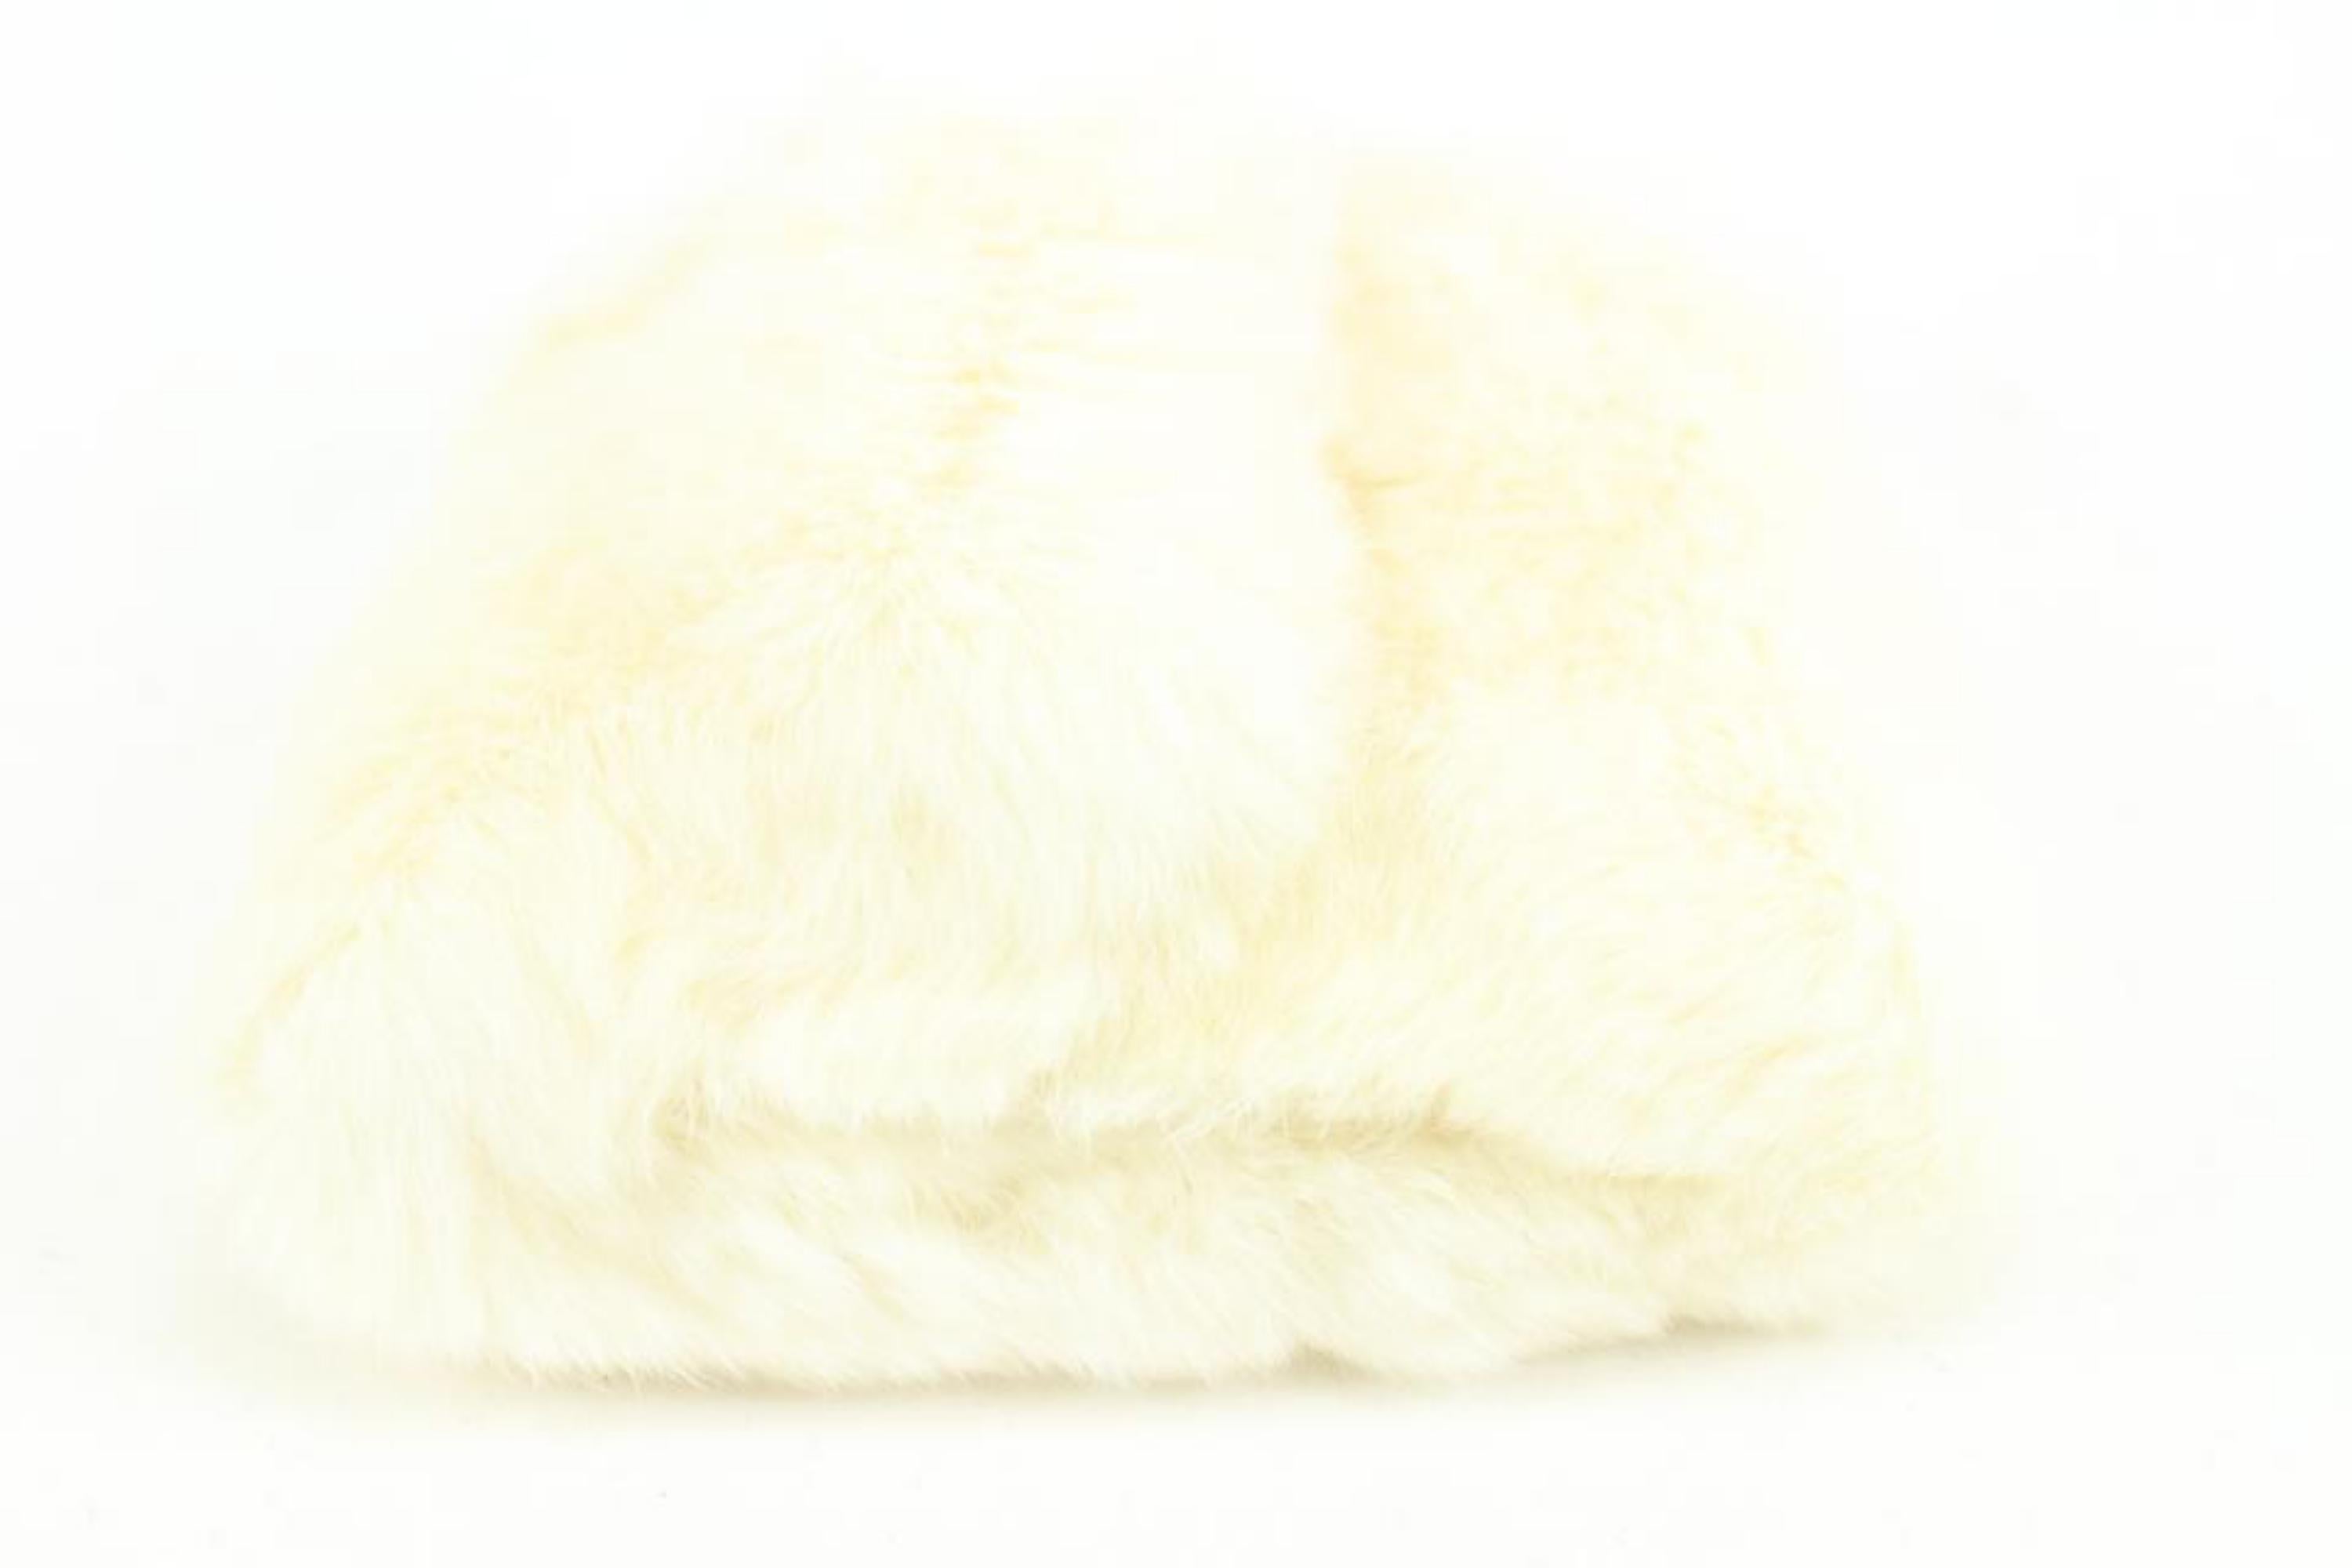 Chanel White x Black CC Rabbit Fur Wrist Band Bracelet s331ck41 For Sale 5